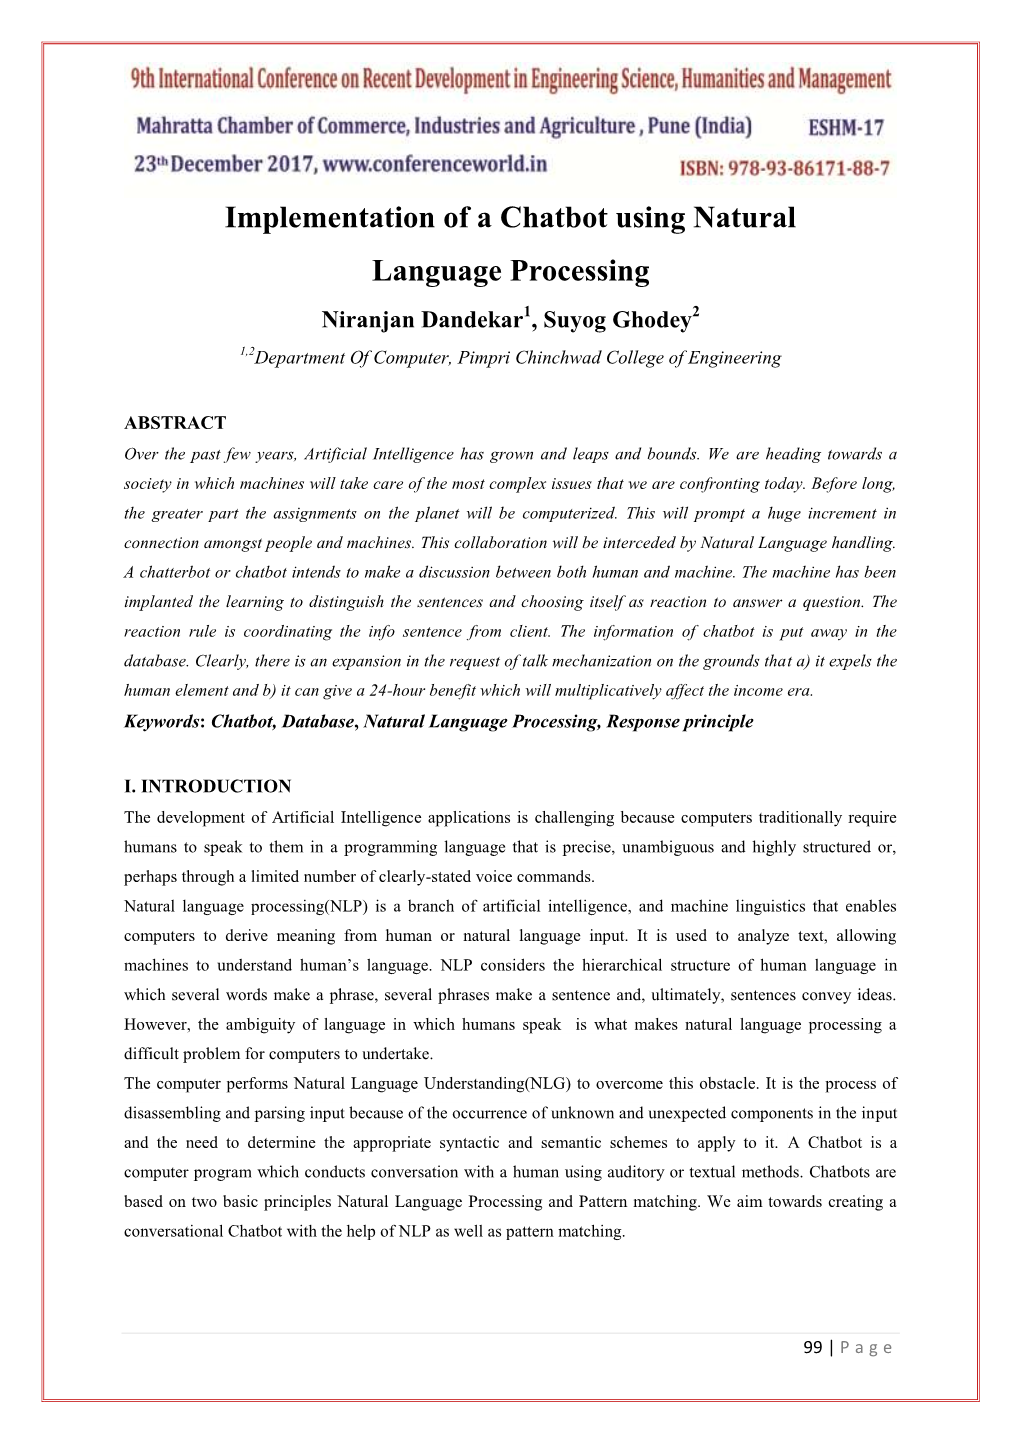 Implementation of a Chatbot Using Natural Language Processing Niranjan Dandekar1, Suyog Ghodey2 1,2Department of Computer, Pimpri Chinchwad College of Engineering